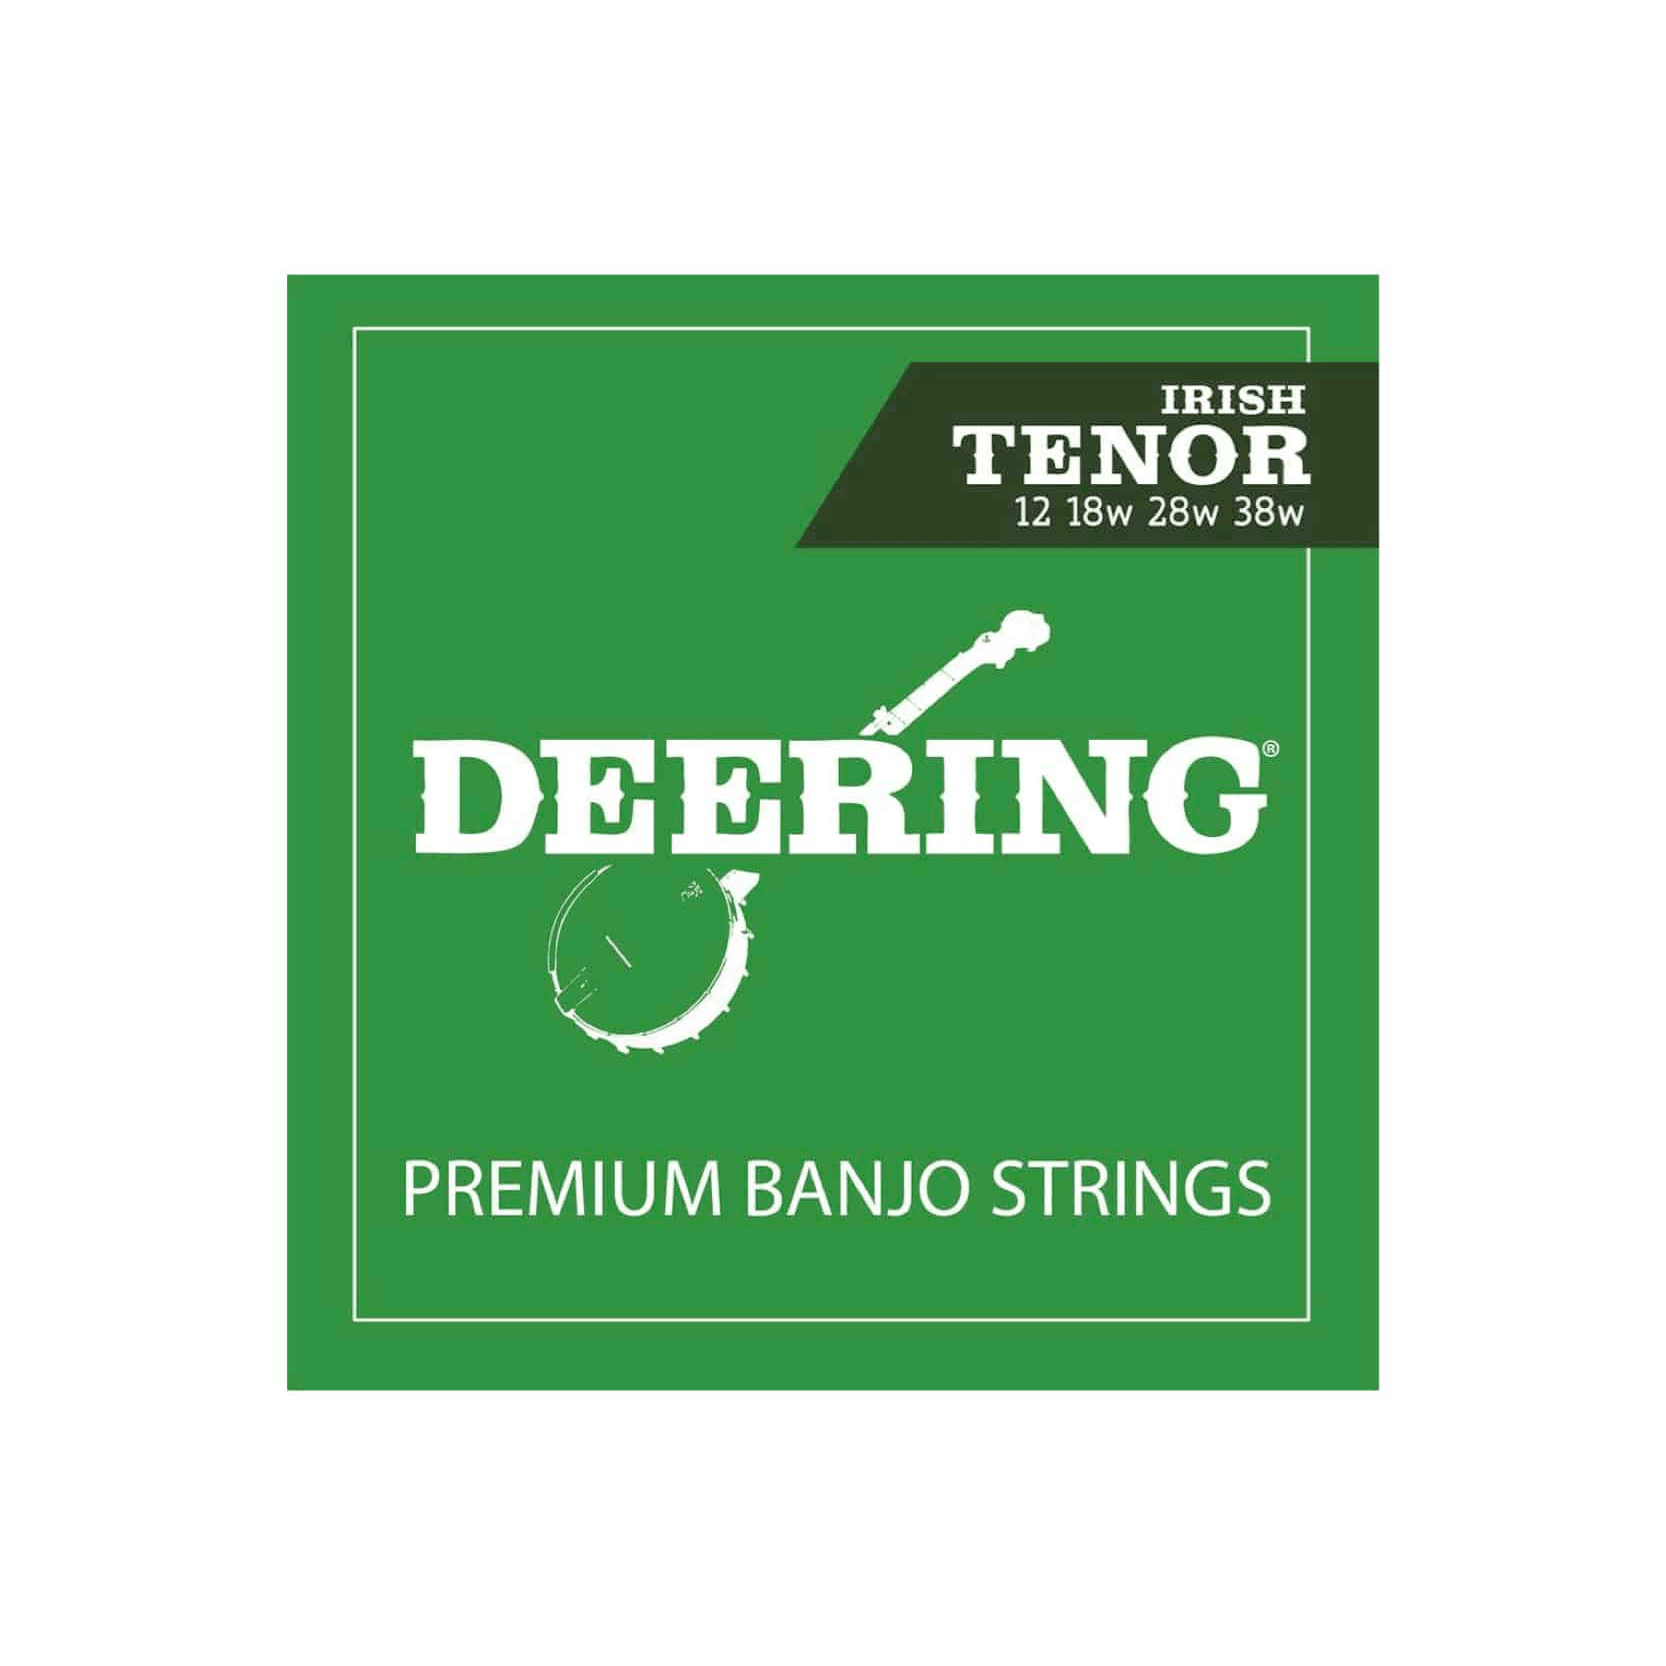 Deering Banjo Strings - Irish Tenor - 12 18W 28W - Strings - Banjo by Deering at Muso's Stuff